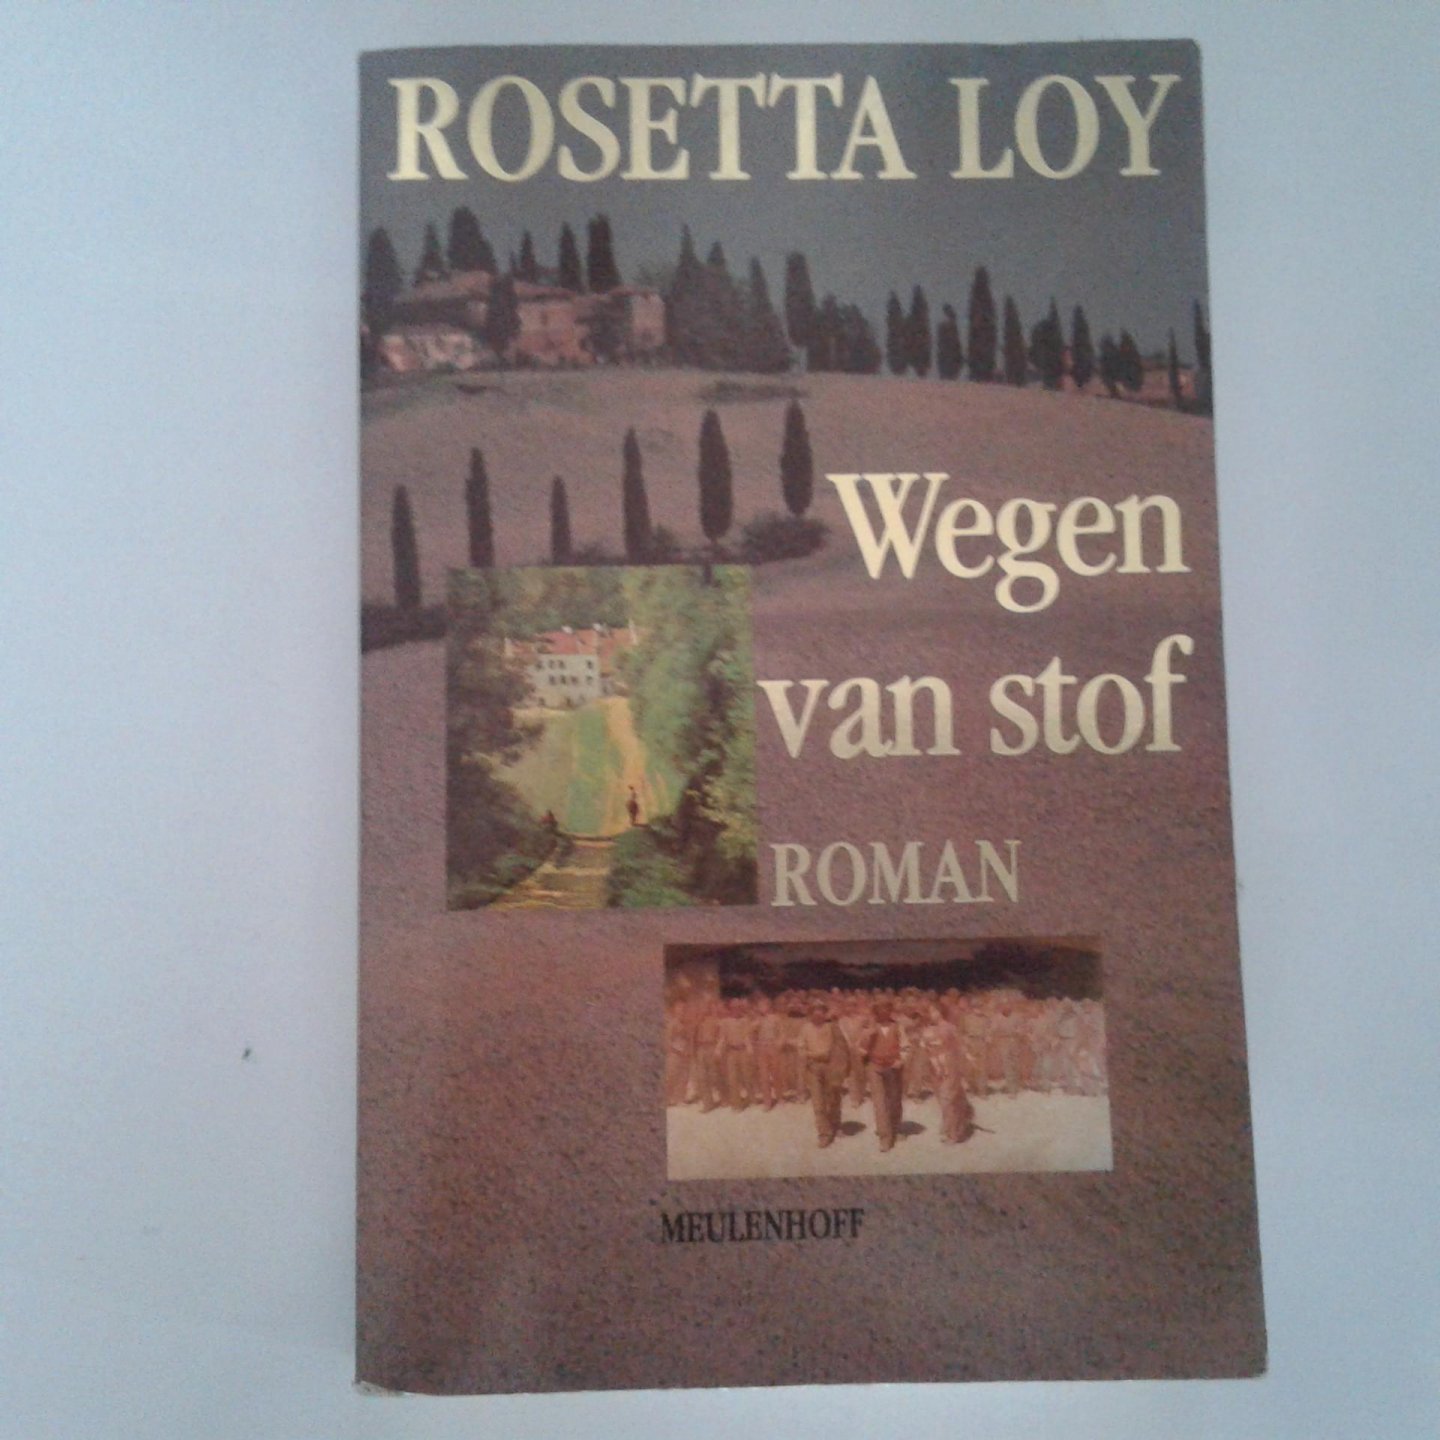 Loy, Rosetta - Rosetta Loy ; Wegen van stof